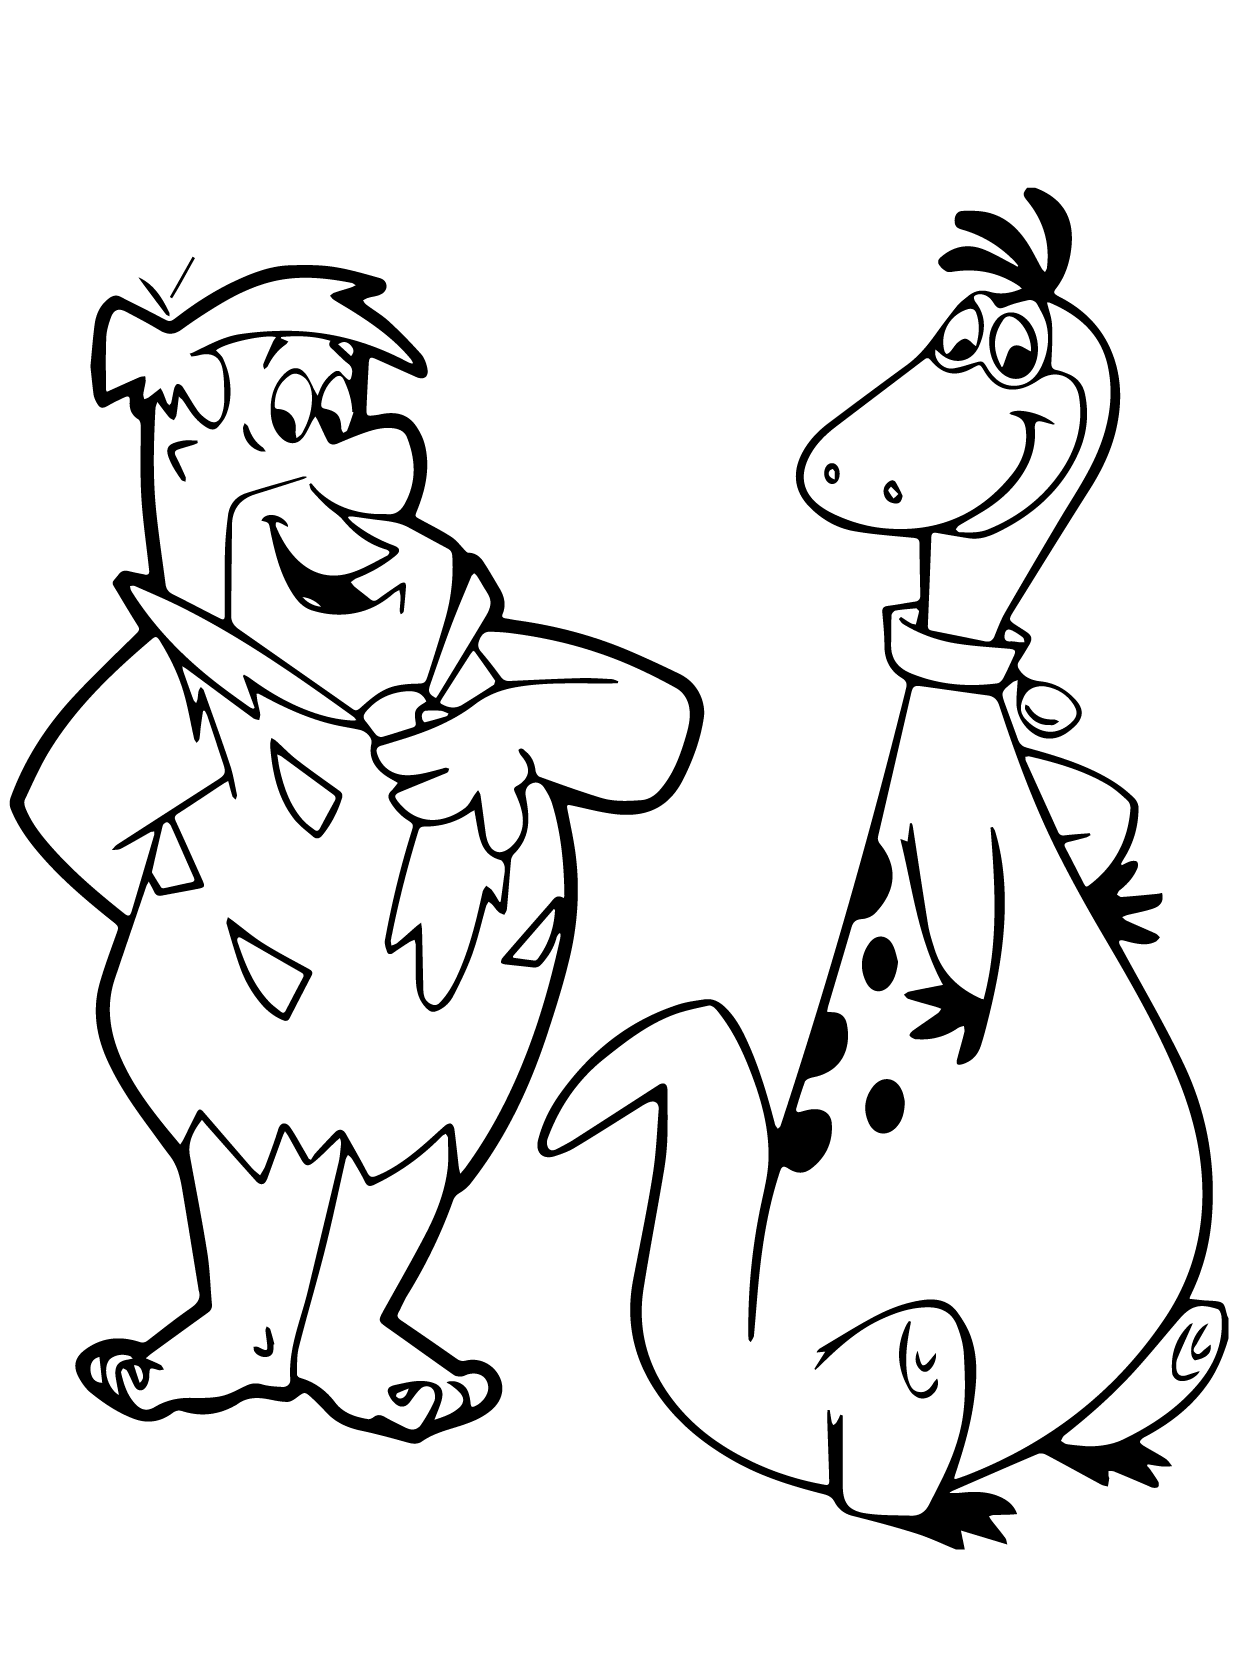 Fred et Dino